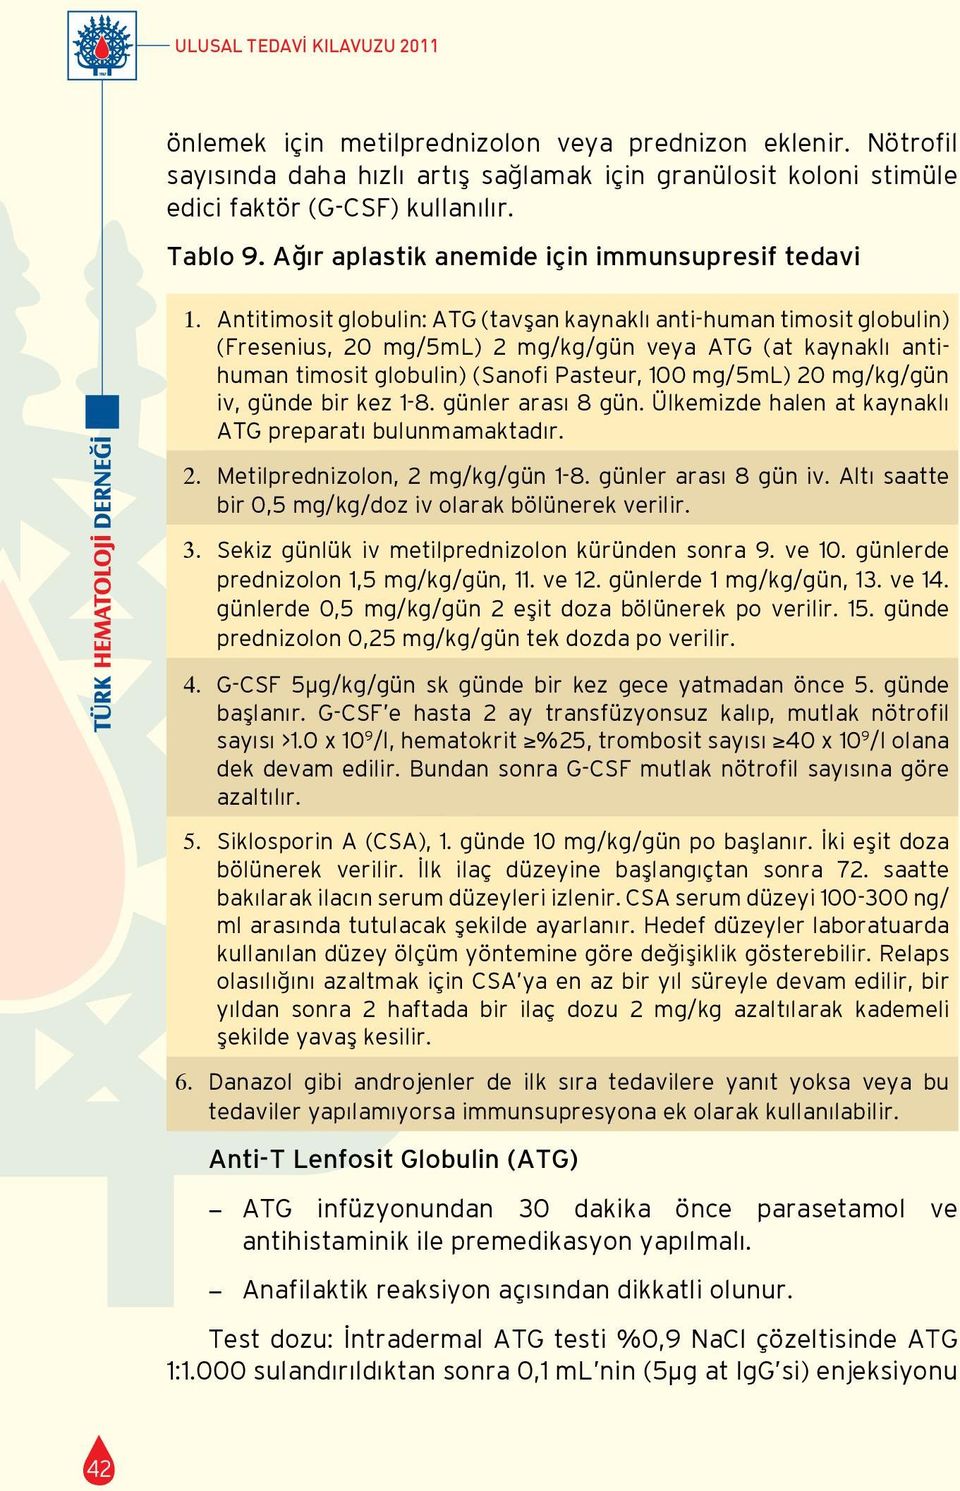 Antitimosit globulin: ATG (tavşan kaynaklı anti-human timosit globulin) (Fresenius, 20 mg/5ml) 2 mg/kg/gün veya ATG (at kaynaklı antihuman timosit globulin) (Sanofi Pasteur, 100 mg/5ml) 20 mg/kg/gün